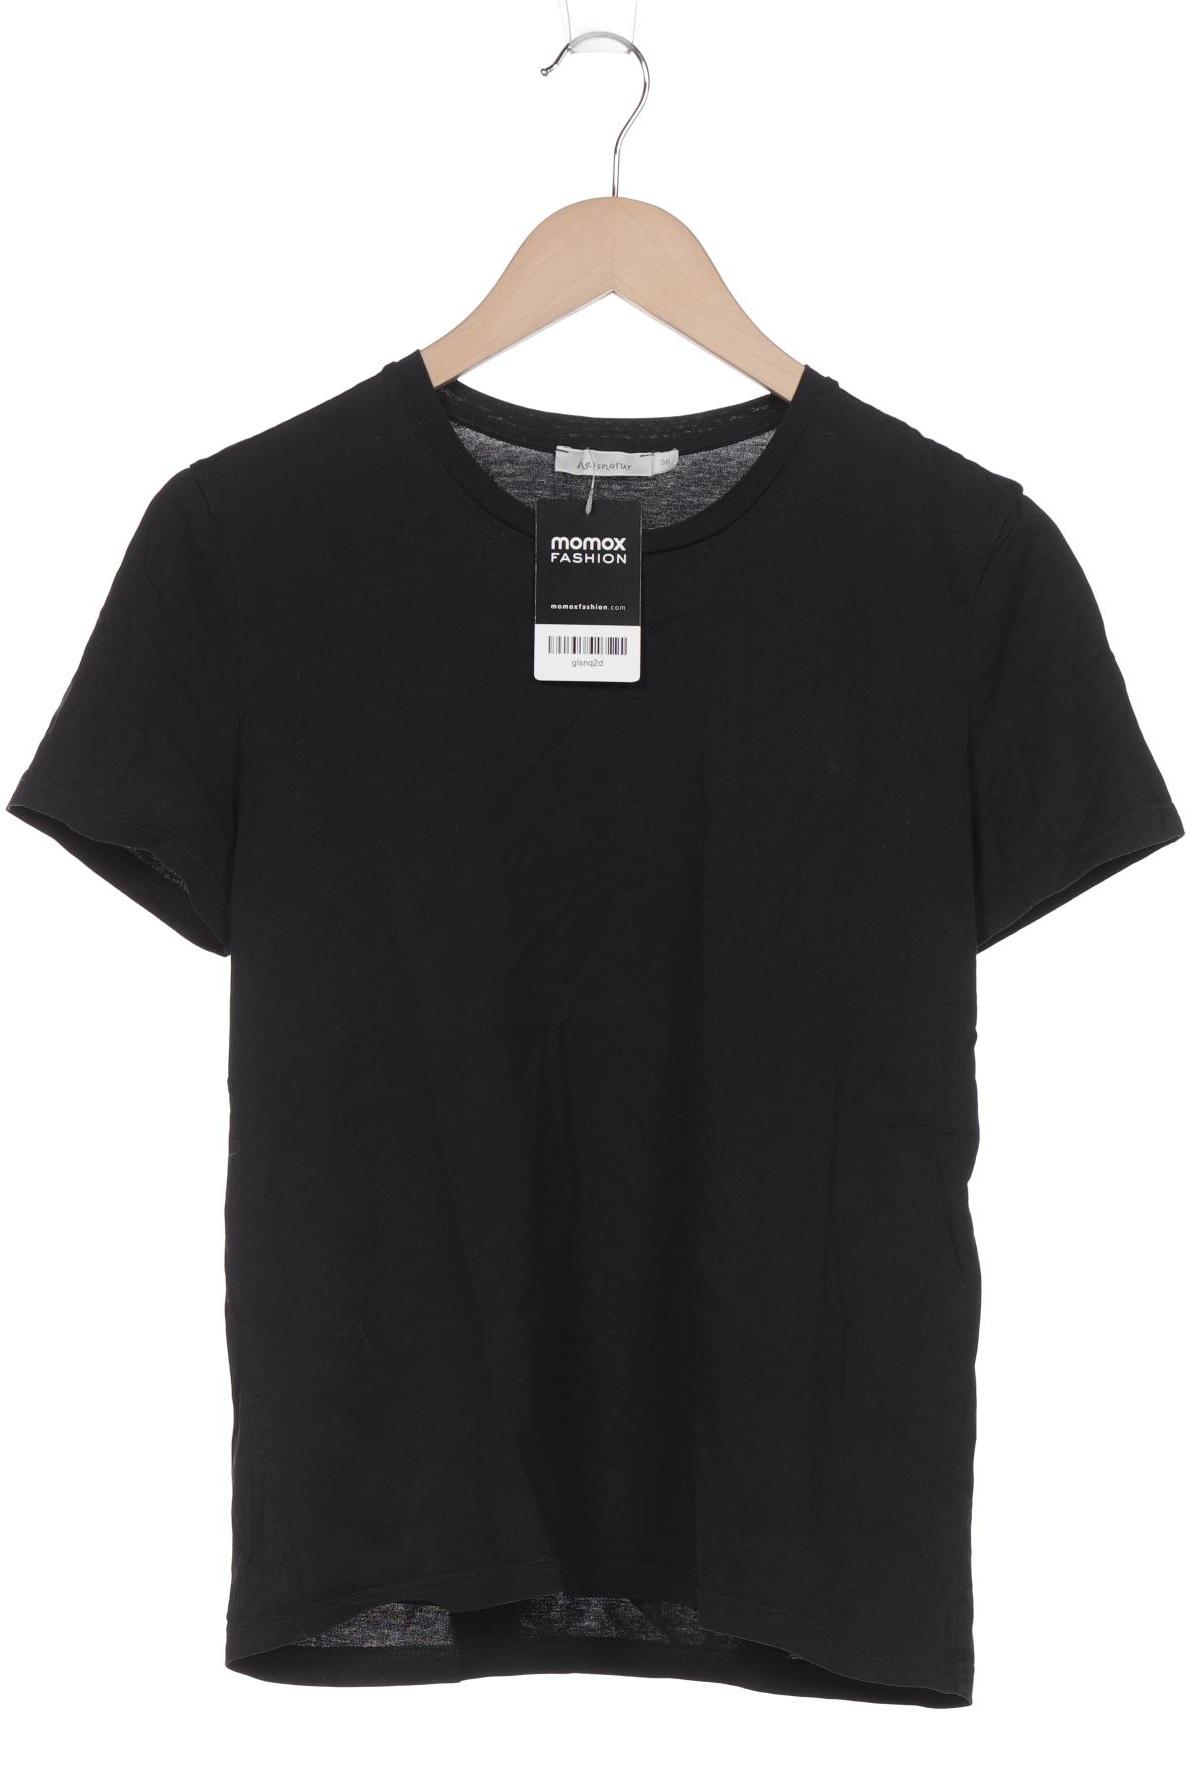 hessnatur Damen T-Shirt, schwarz von hessnatur